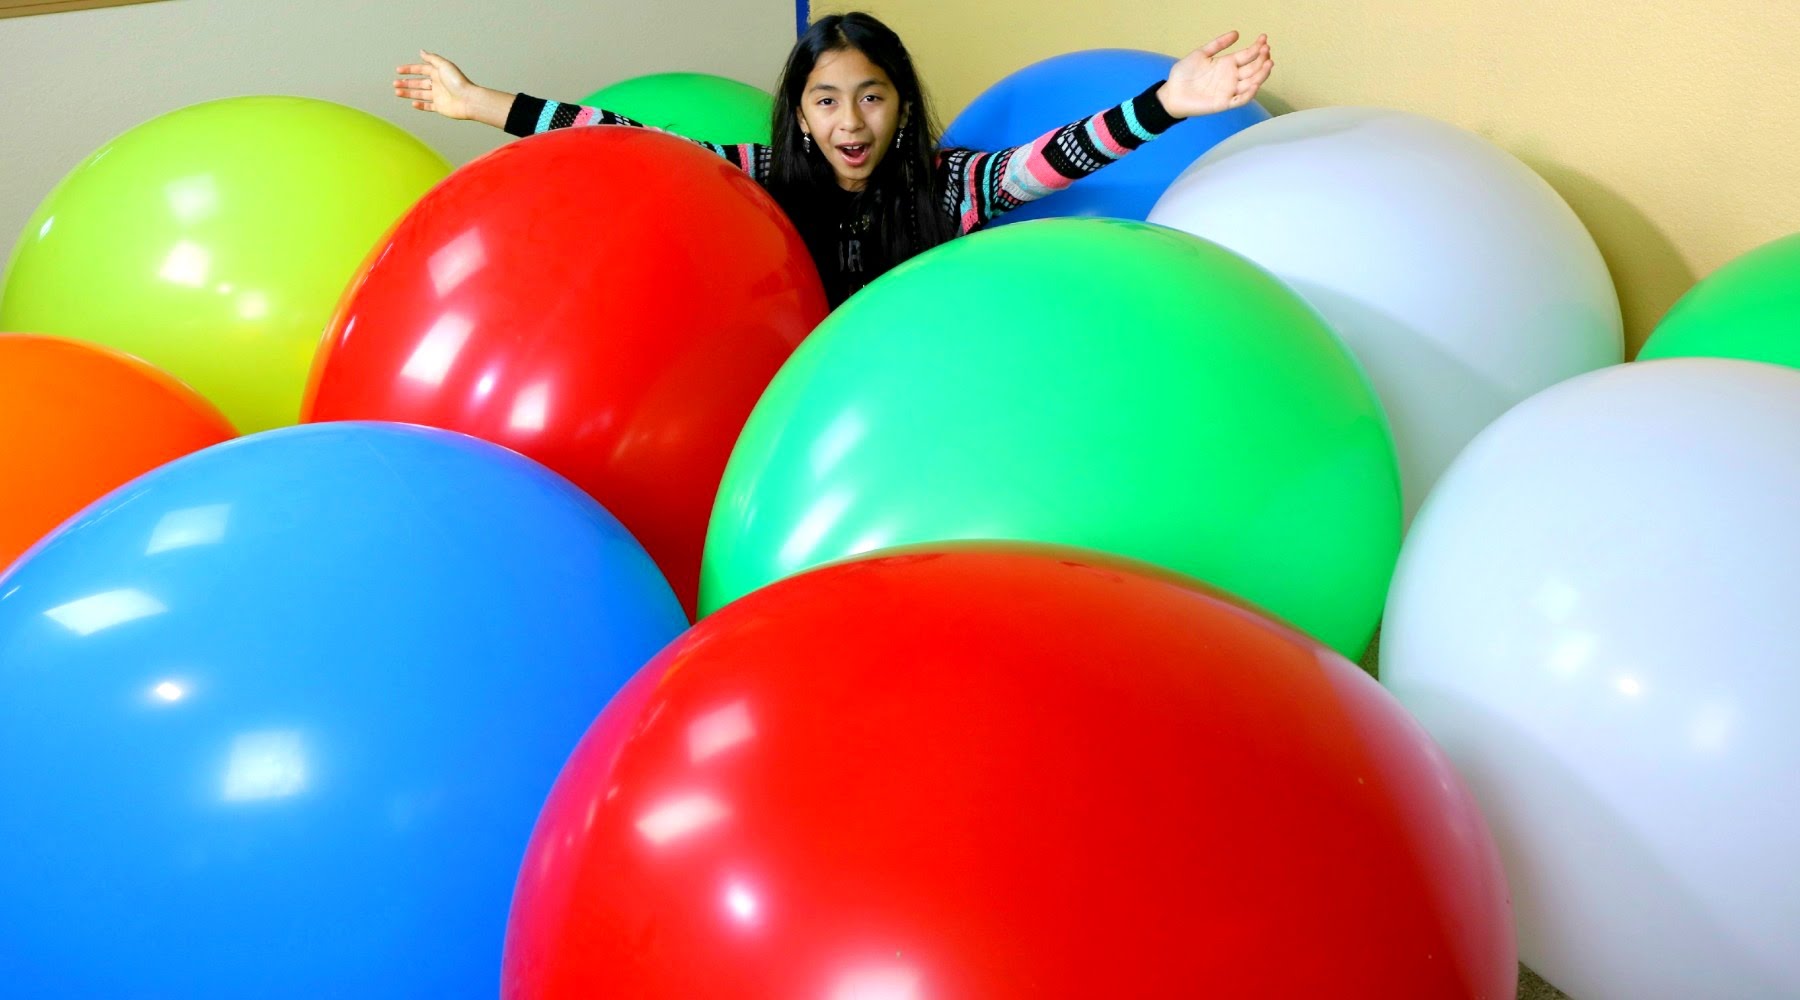 Balloon popping girls. Giant Balloon. Pop giant Balloon. Интерактив со зрителями c большими шарами. Balloon Pop Challenge.